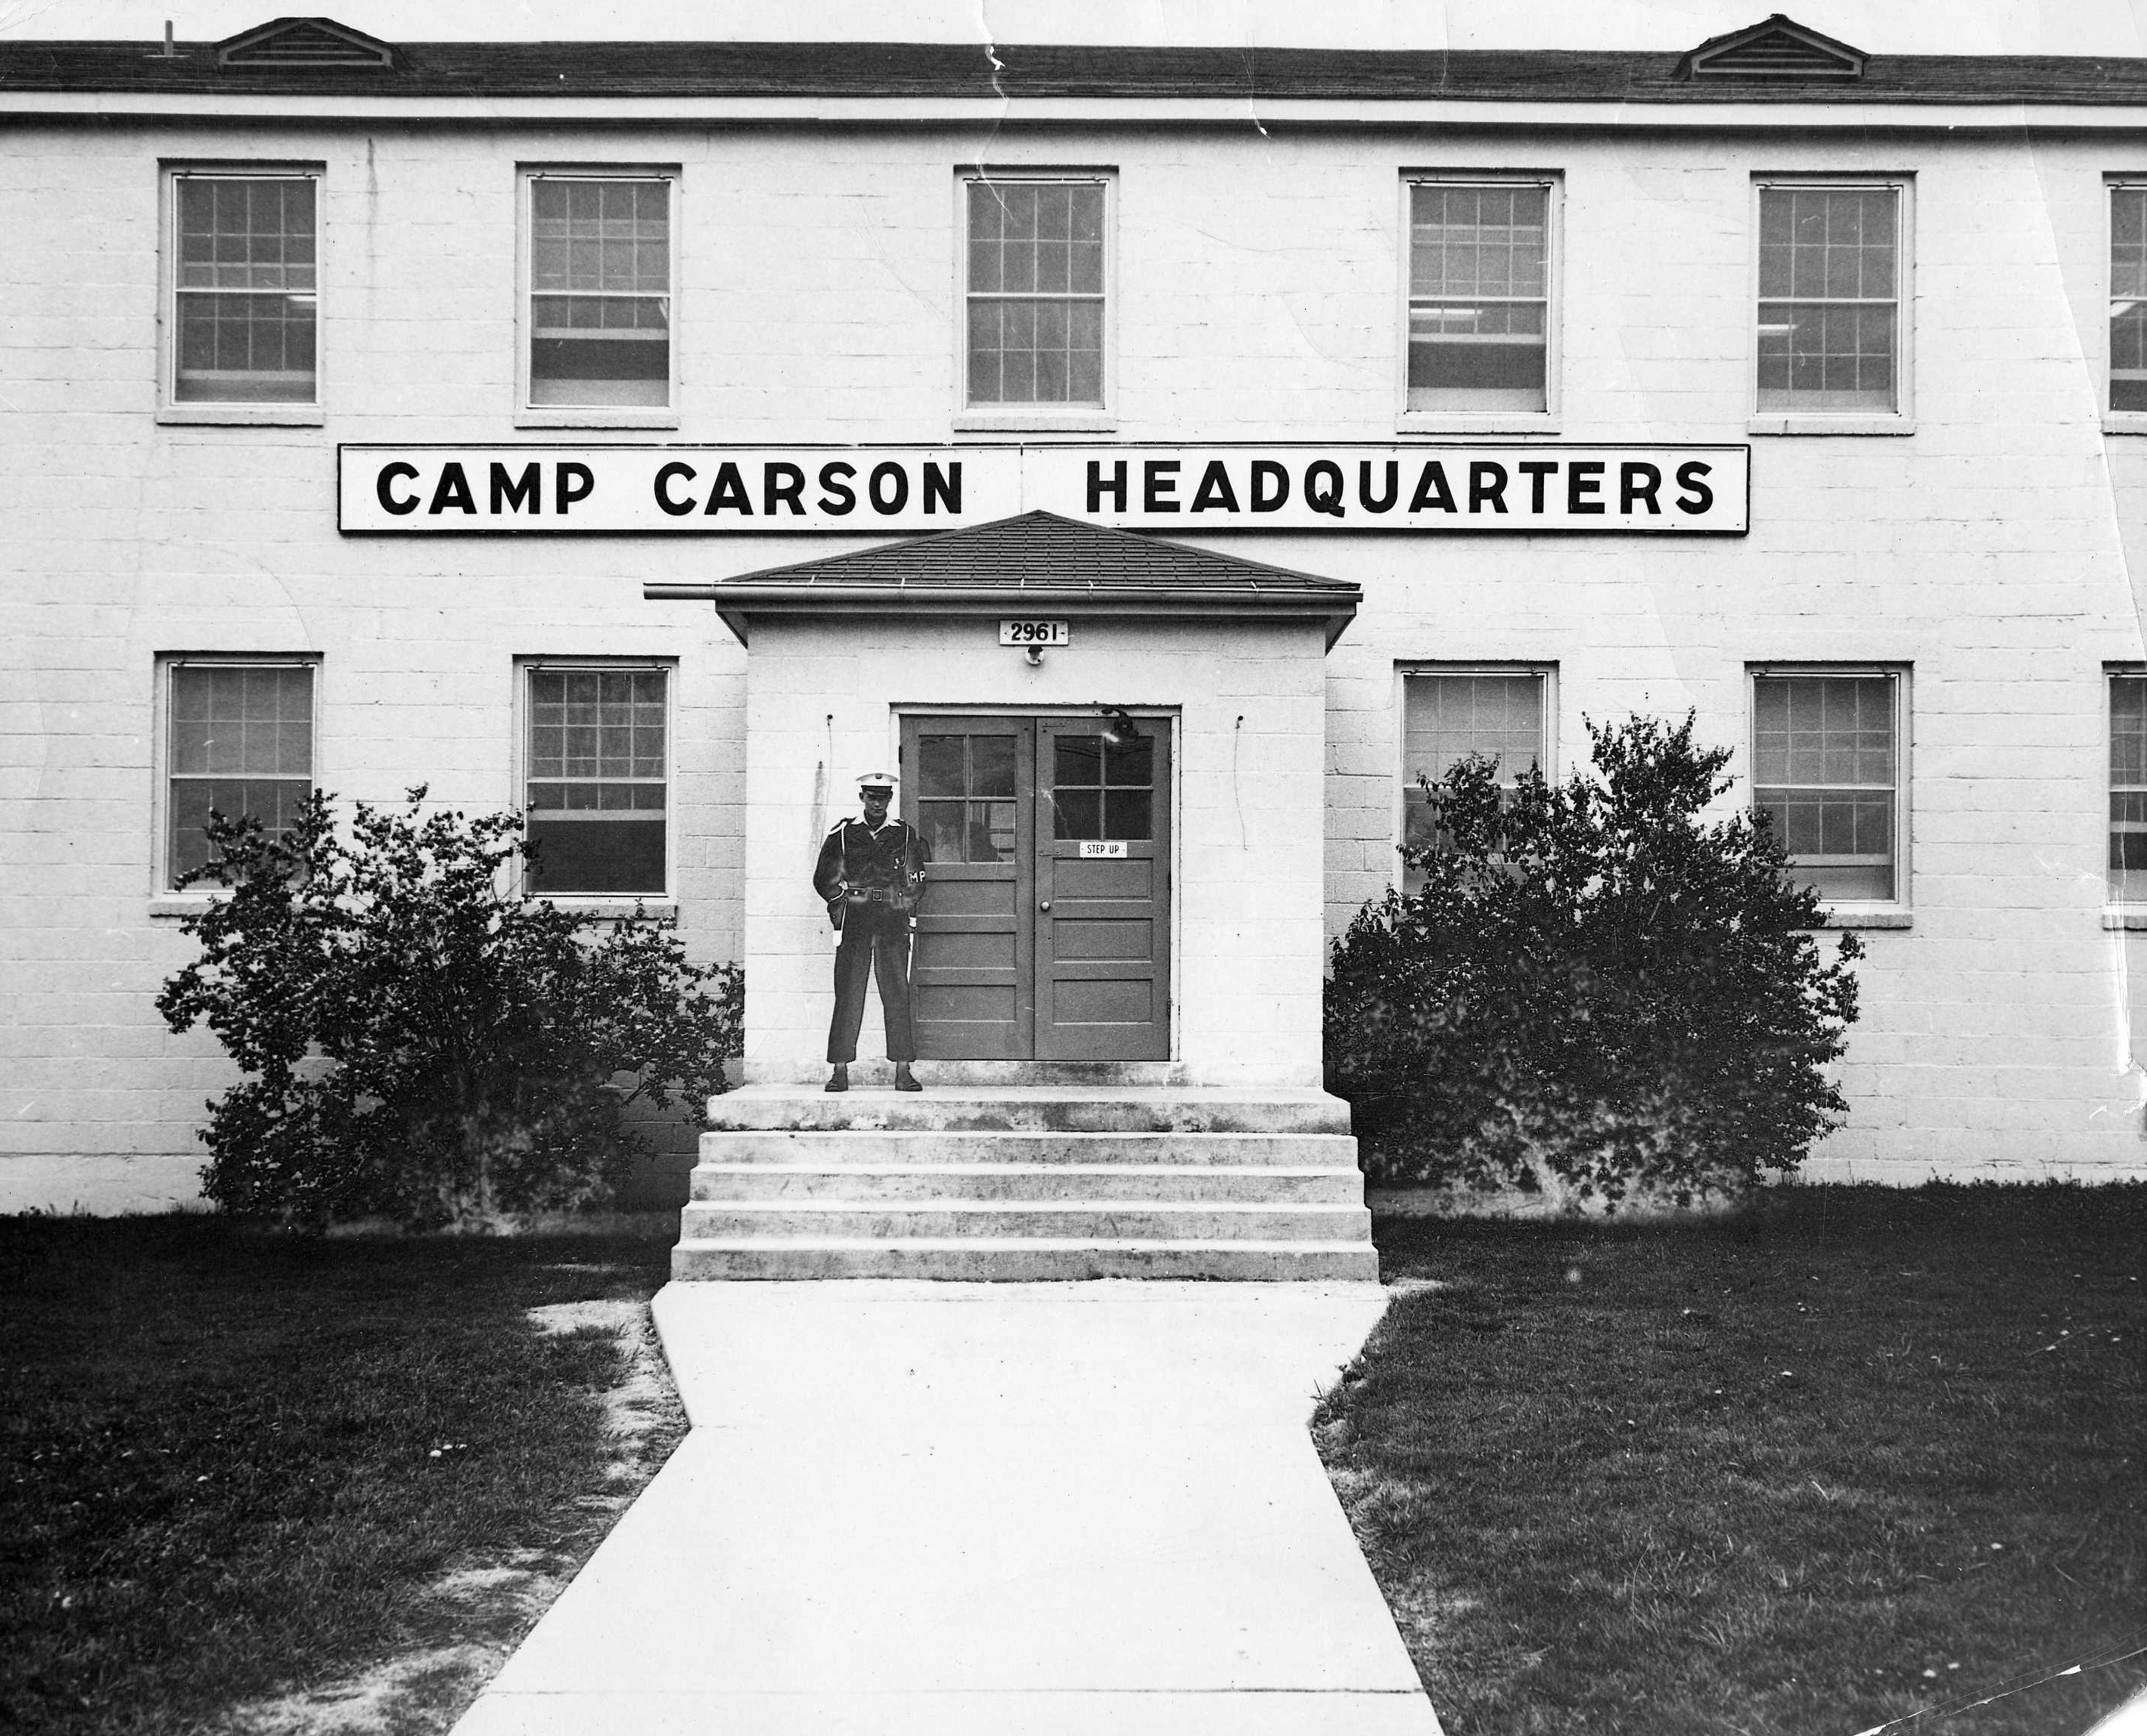 Camp Carson headquarters building, Colorado, United States, 1950s